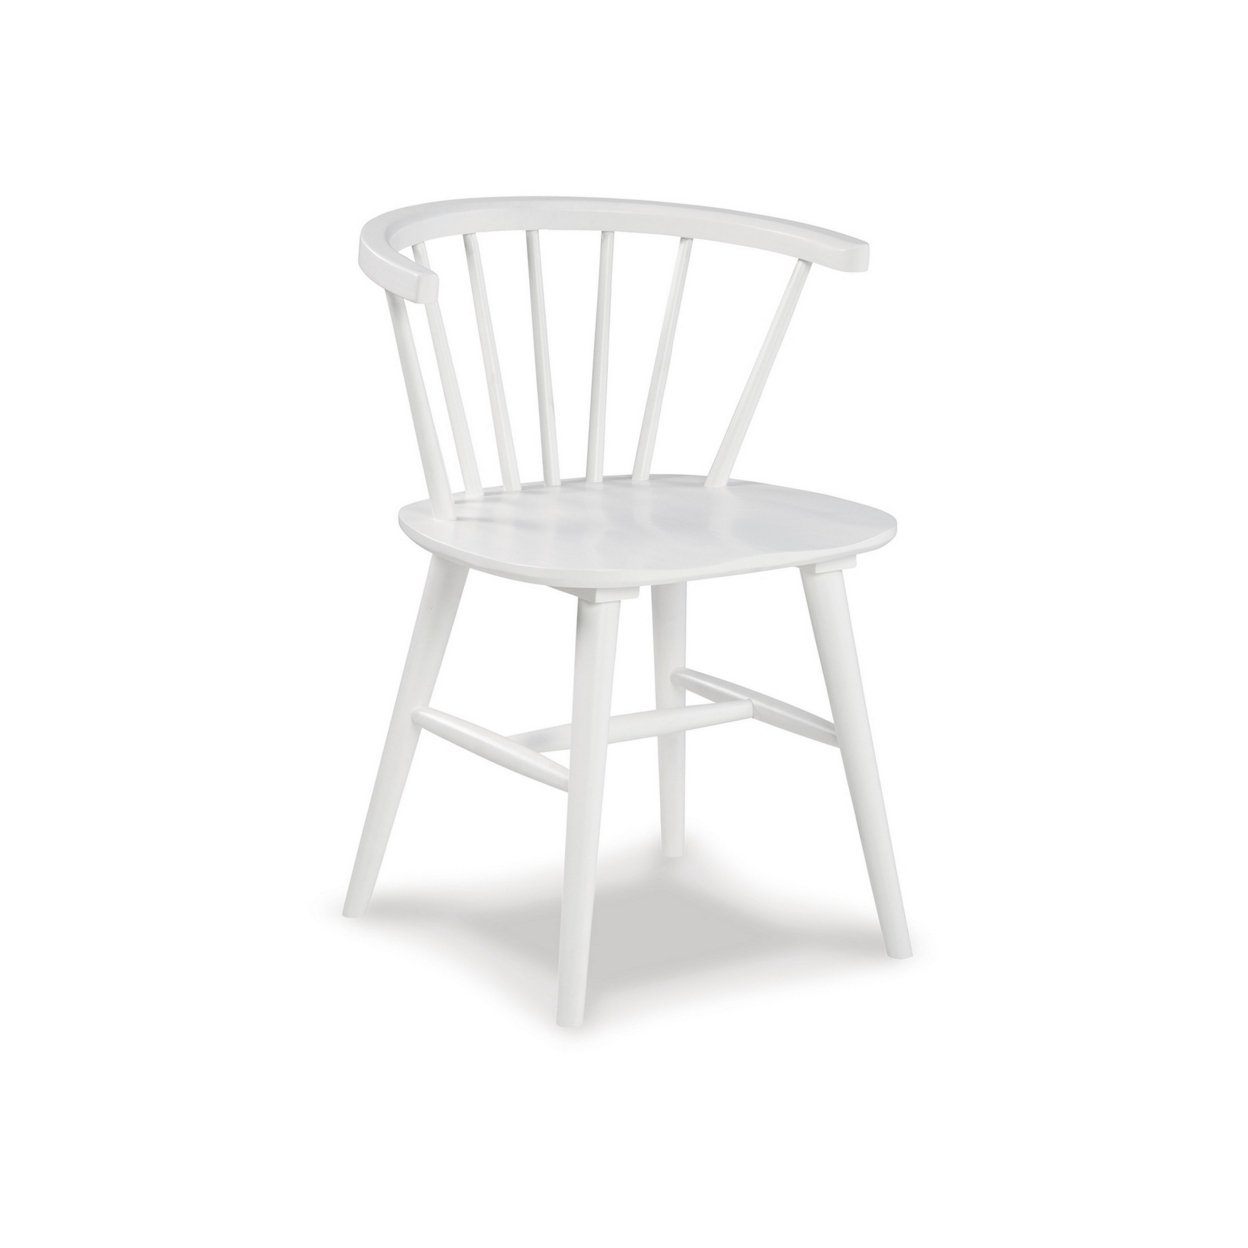 22 Inch Set Of 2 Dining Chairs, Spindle Backrest, Matte White Wood Design- Saltoro Sherpi